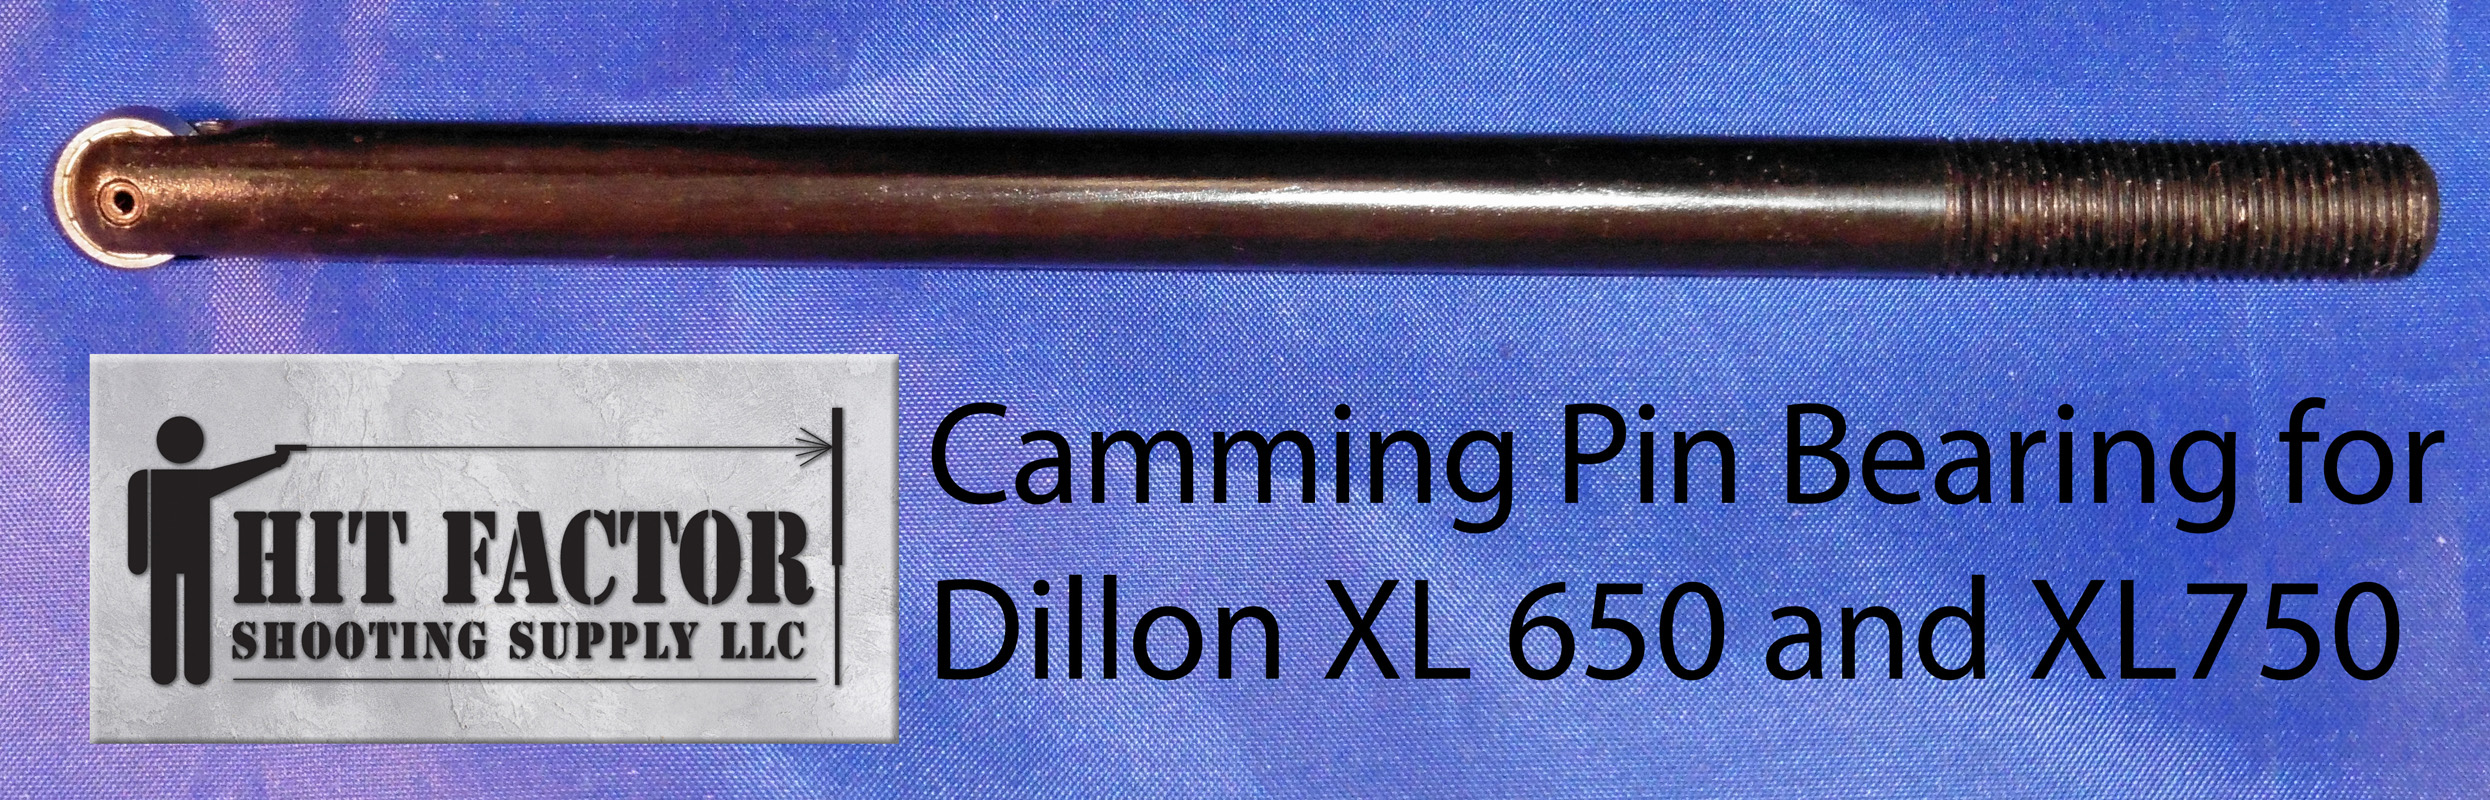 Camming Pin Bearing installed